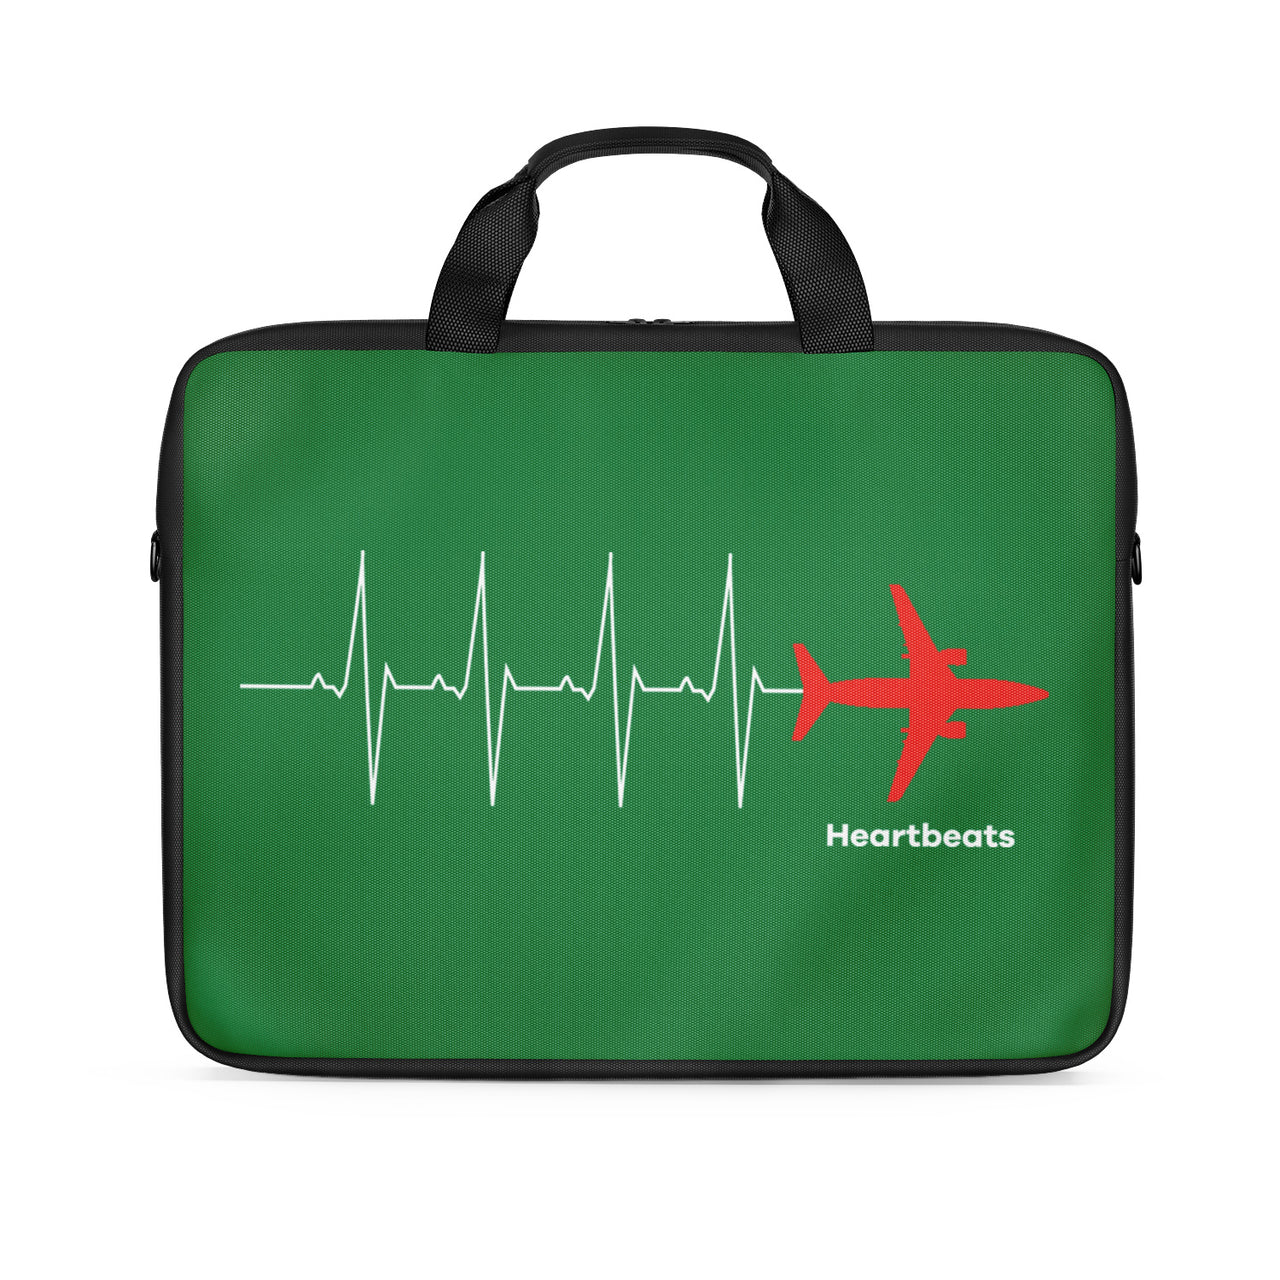 Aviation Heartbeats Designed Laptop & Tablet Bags